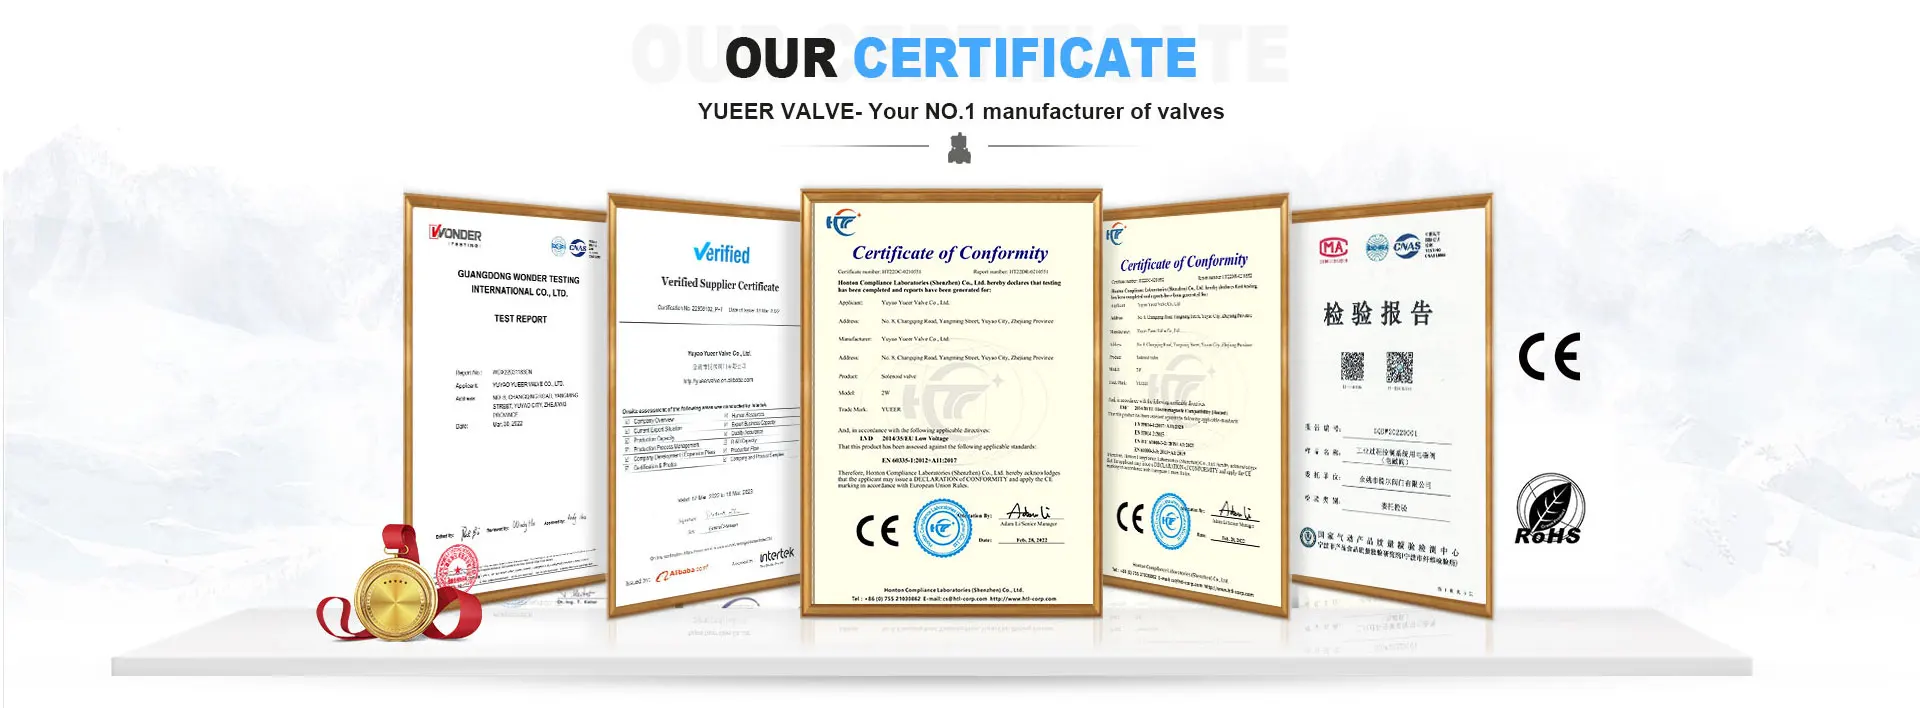 Yuyao Yueer Valve Co., Ltd. - 2W Solenoid Valve, 2L Solenoid Valve